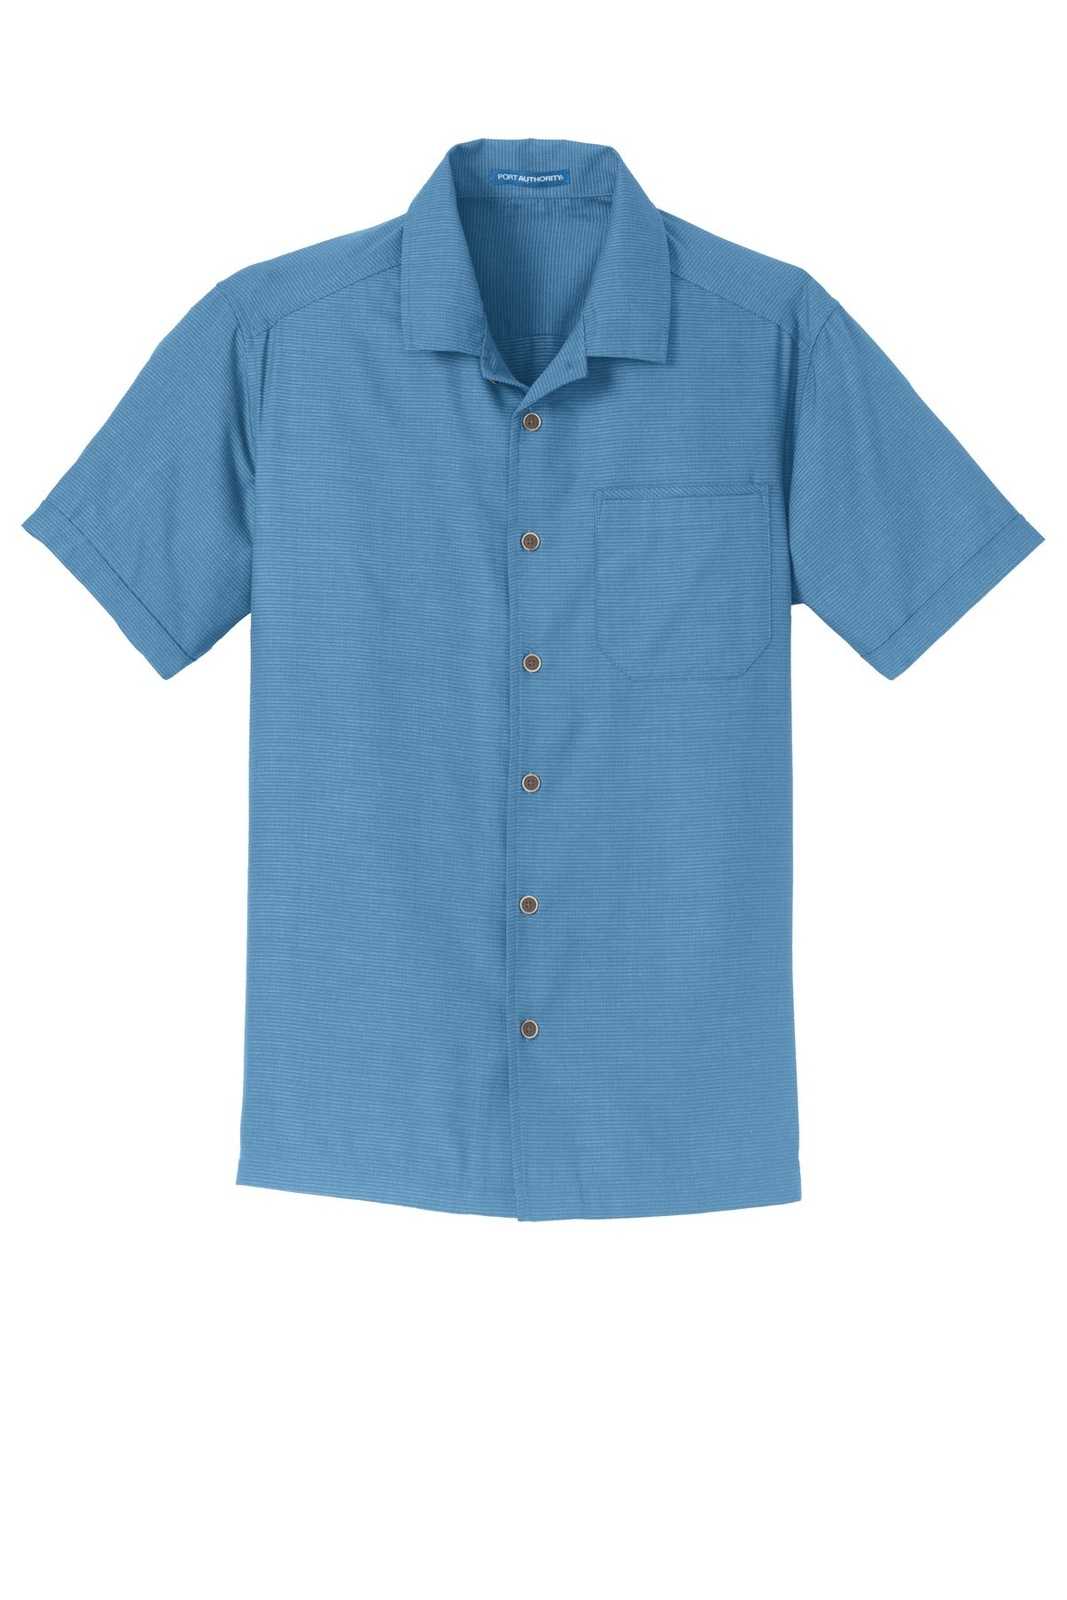 Port Authority S662 Textured Camp Shirt - Celadon - HIT a Double - 5